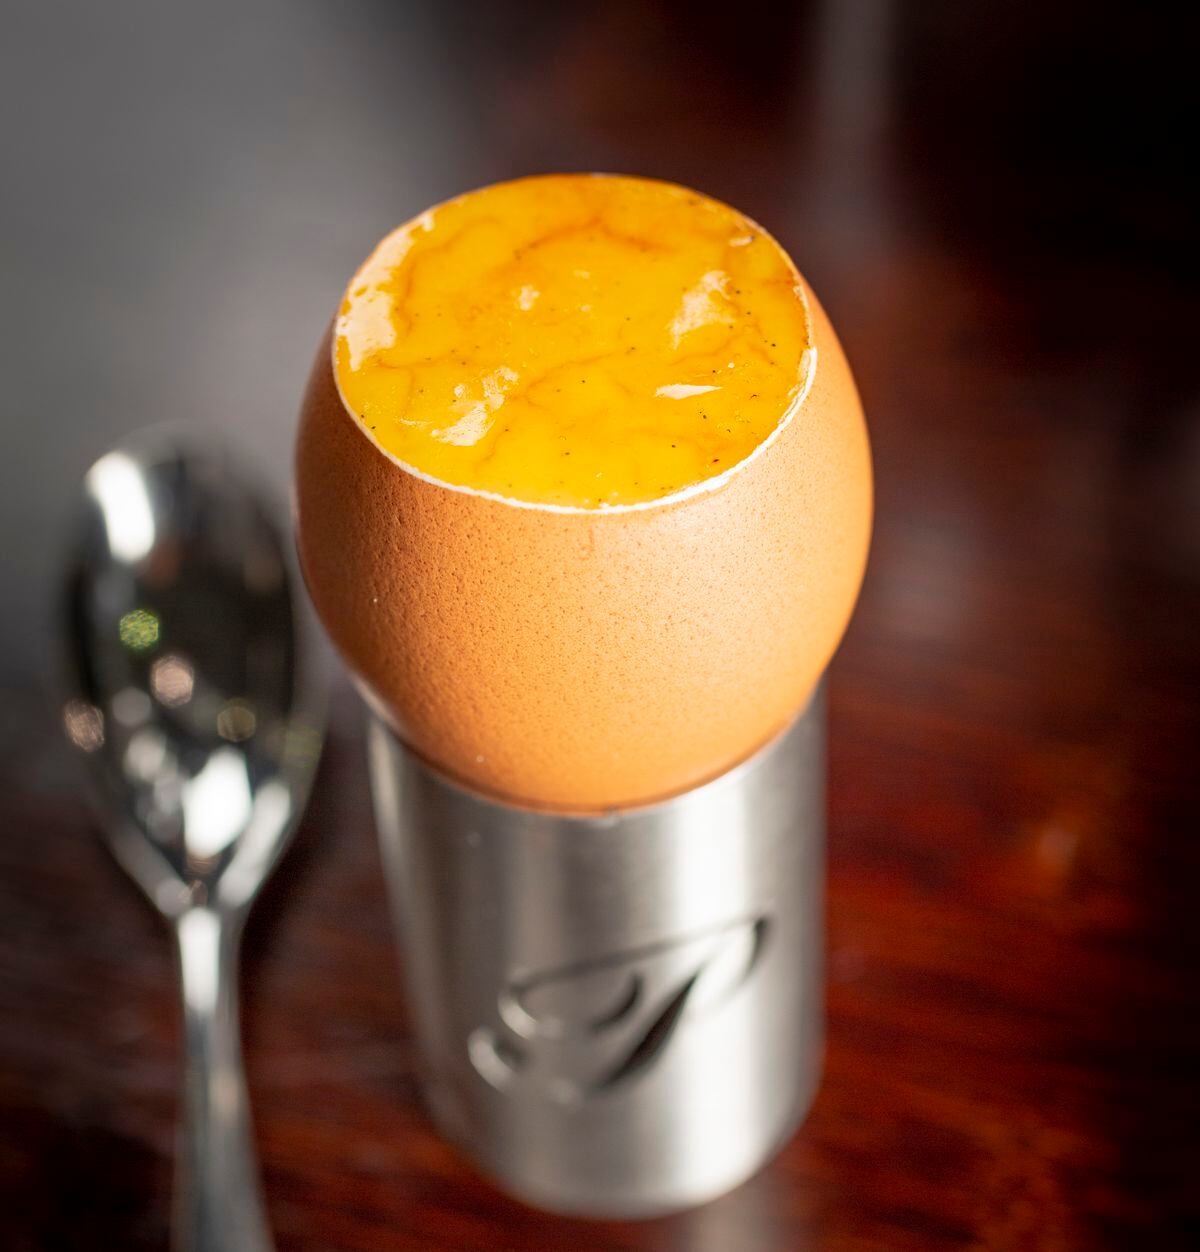 The Burnt English Egg Surprise